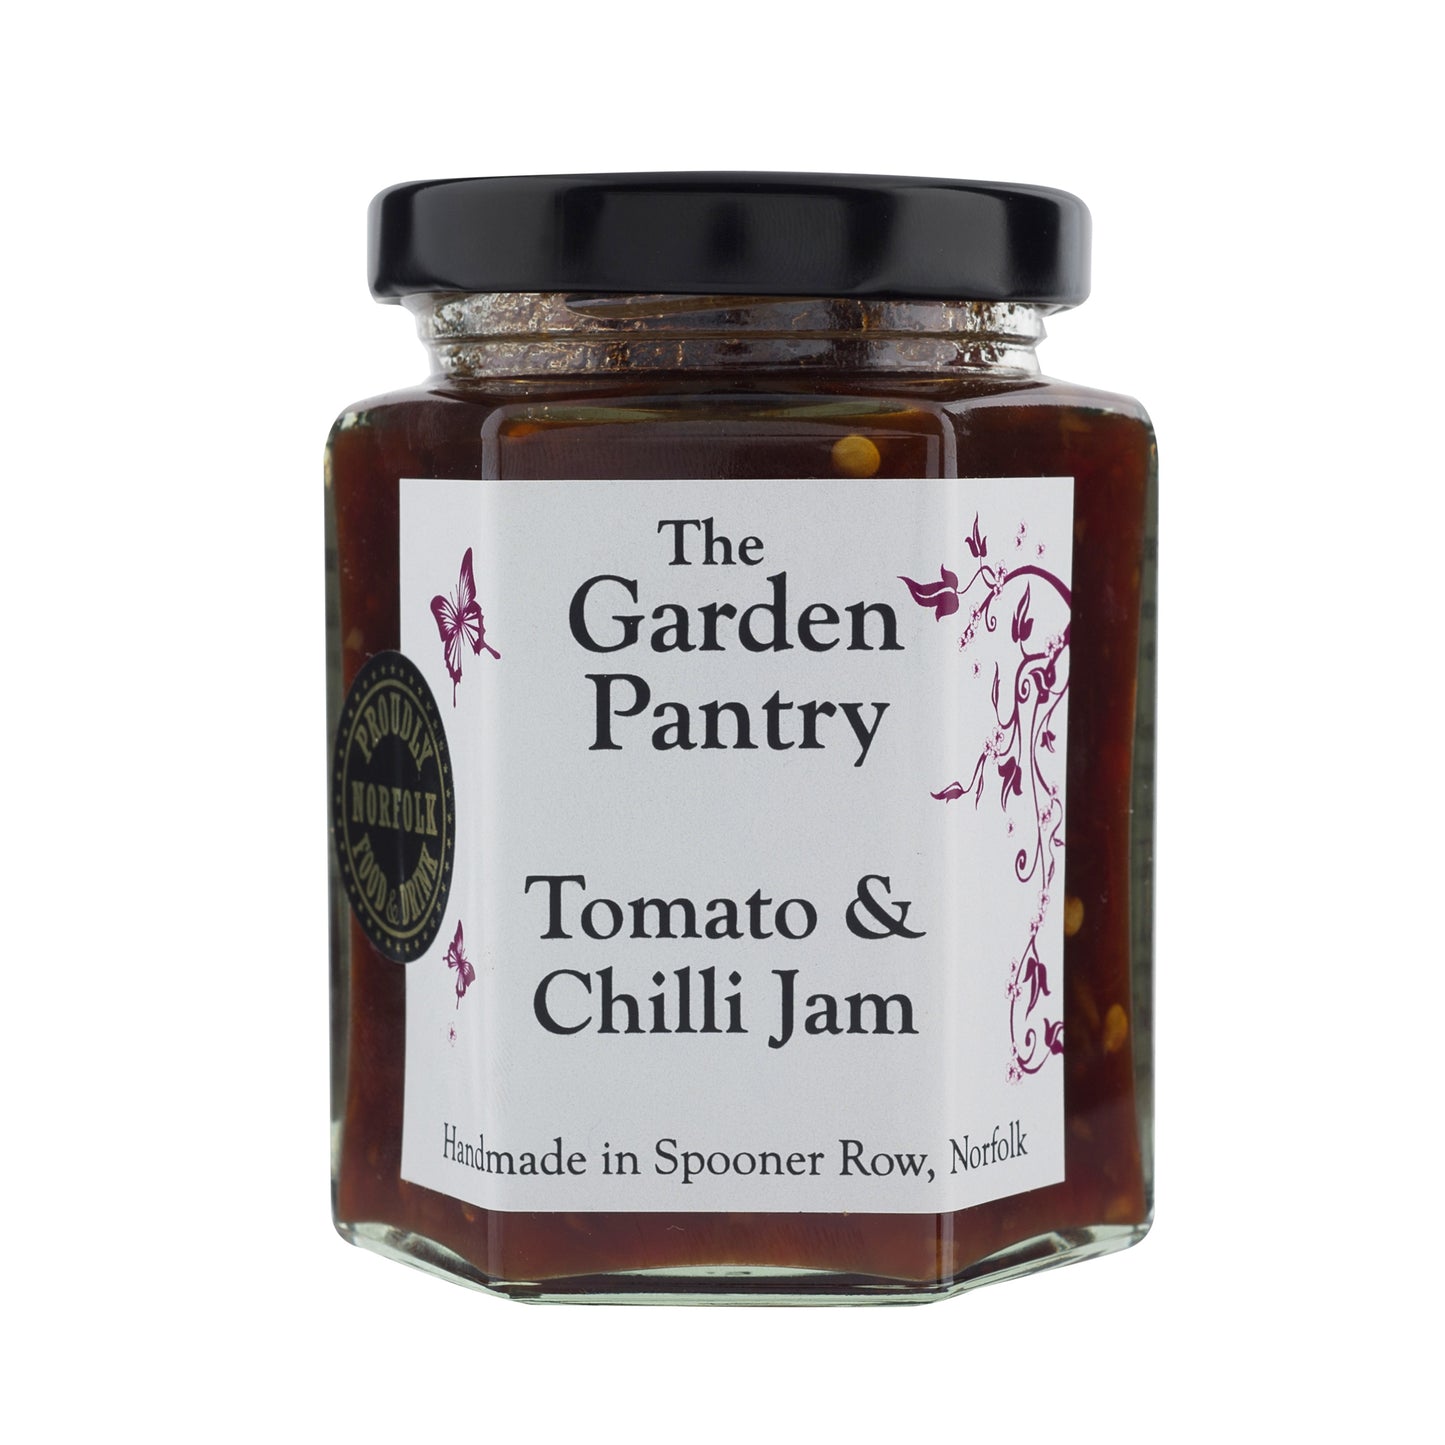 The Garden Pantry Tomato & Chilli Jam